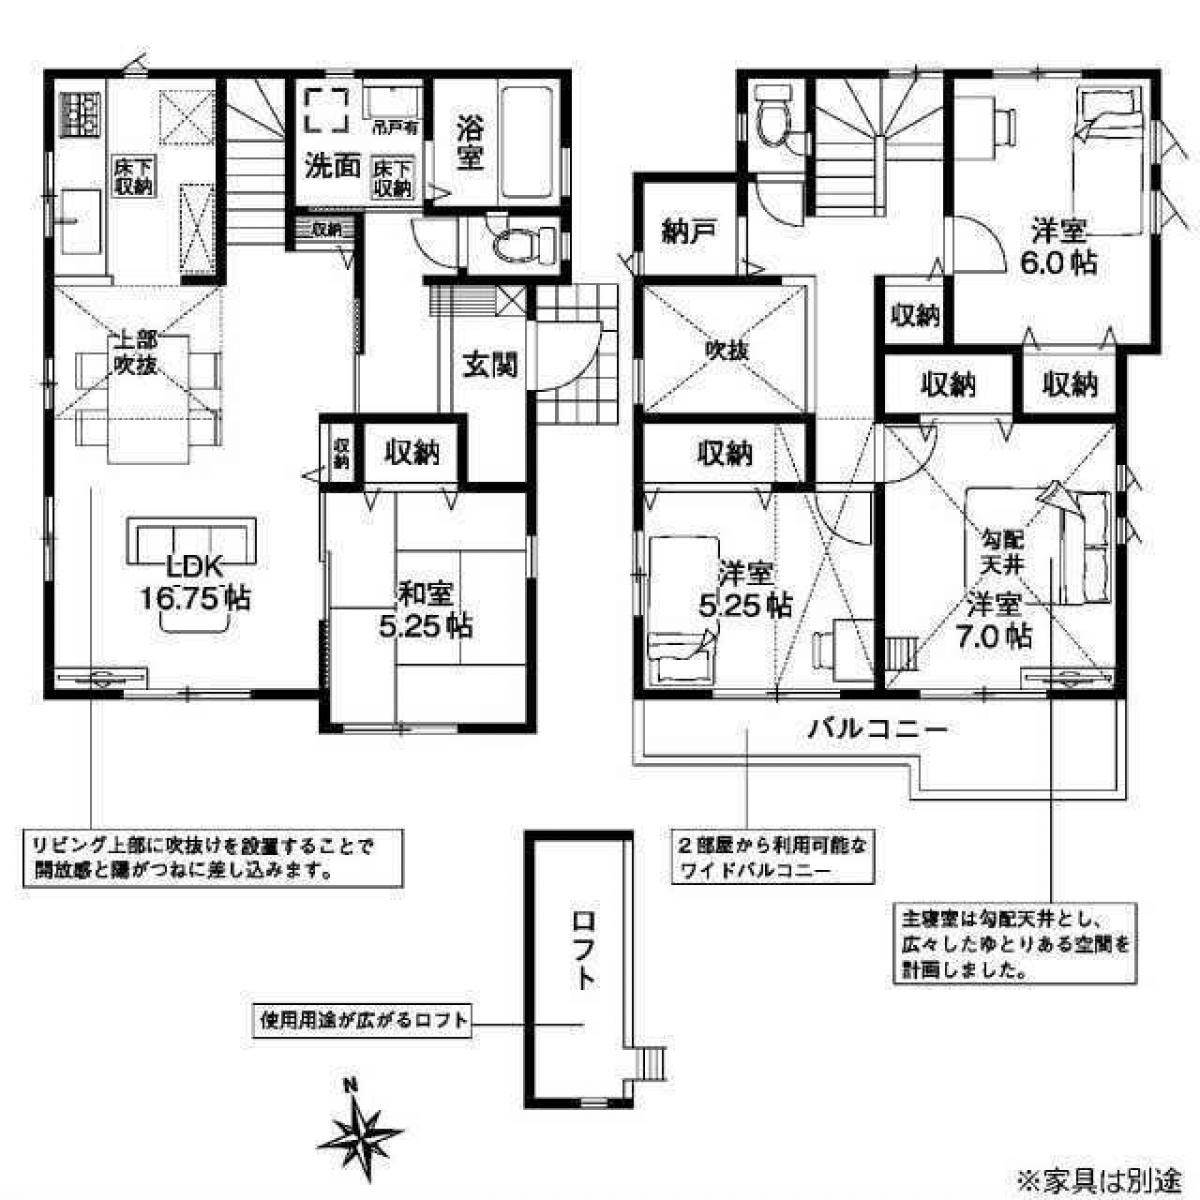 Picture of Home For Sale in Hirakata Shi, Osaka, Japan